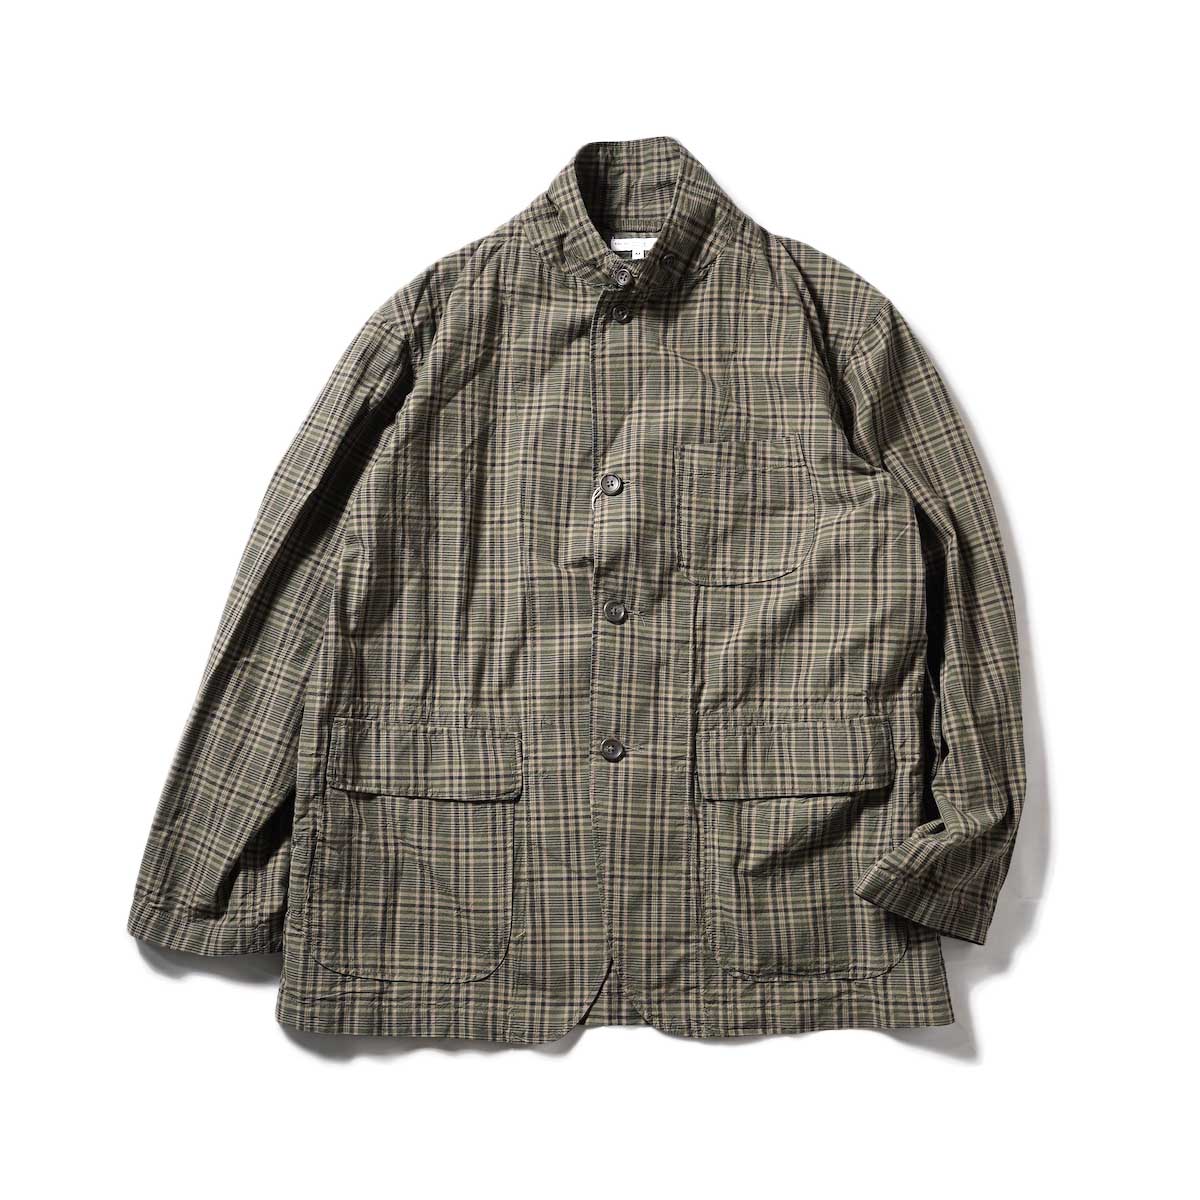 Engineered Garments / Loiter Jacket - Cotton Madras Check (Olive/Brown)イメージ